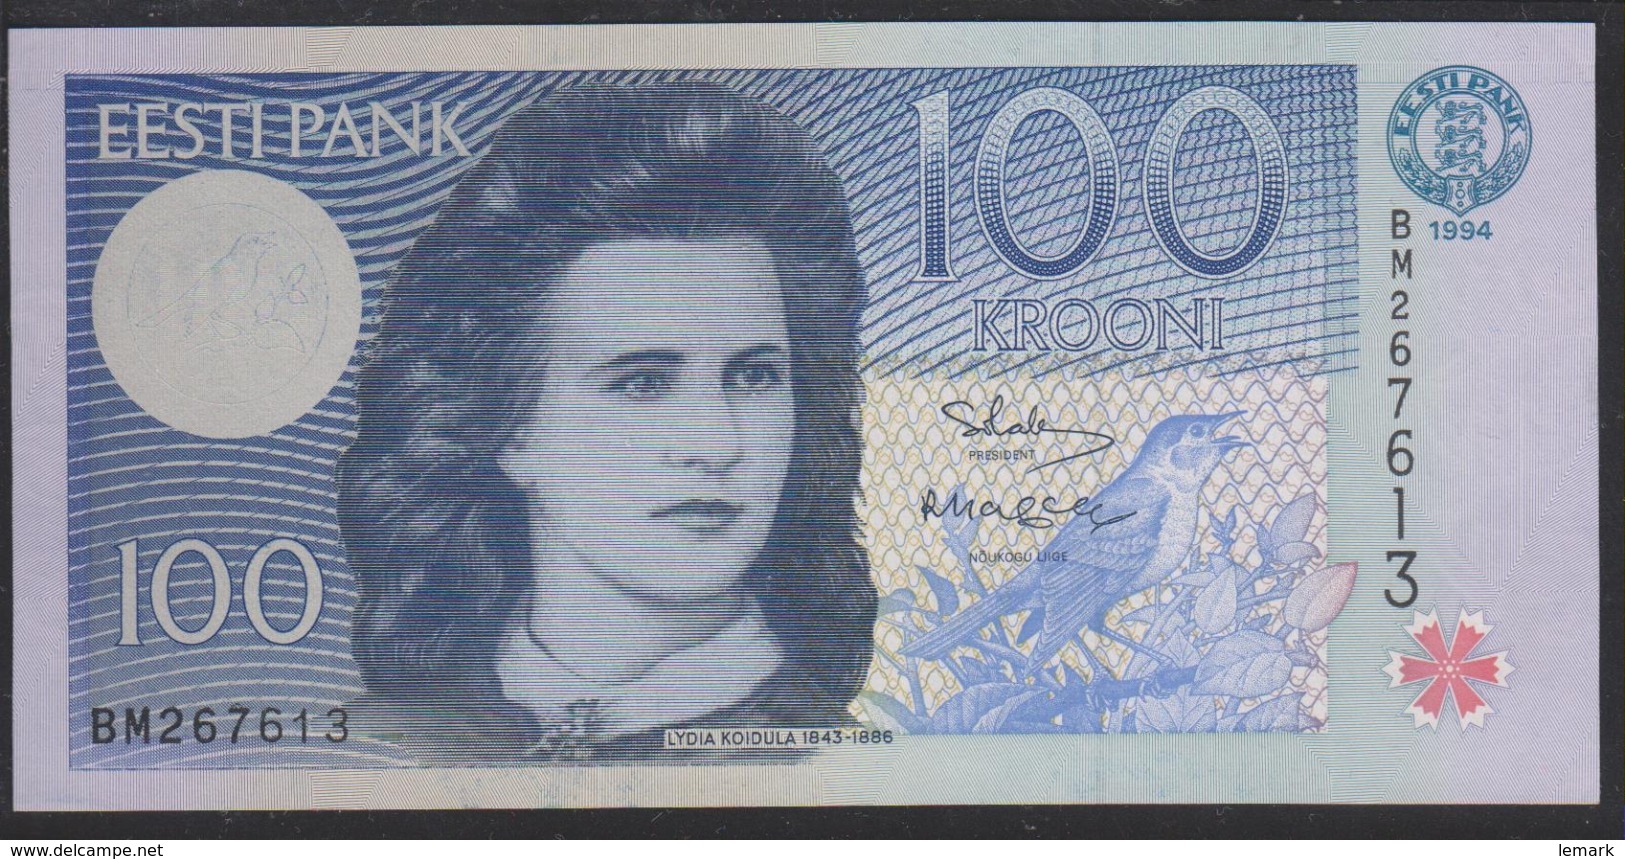 Estonia 100 Krooni 1994 P79a BM267613 UNC - Estonia